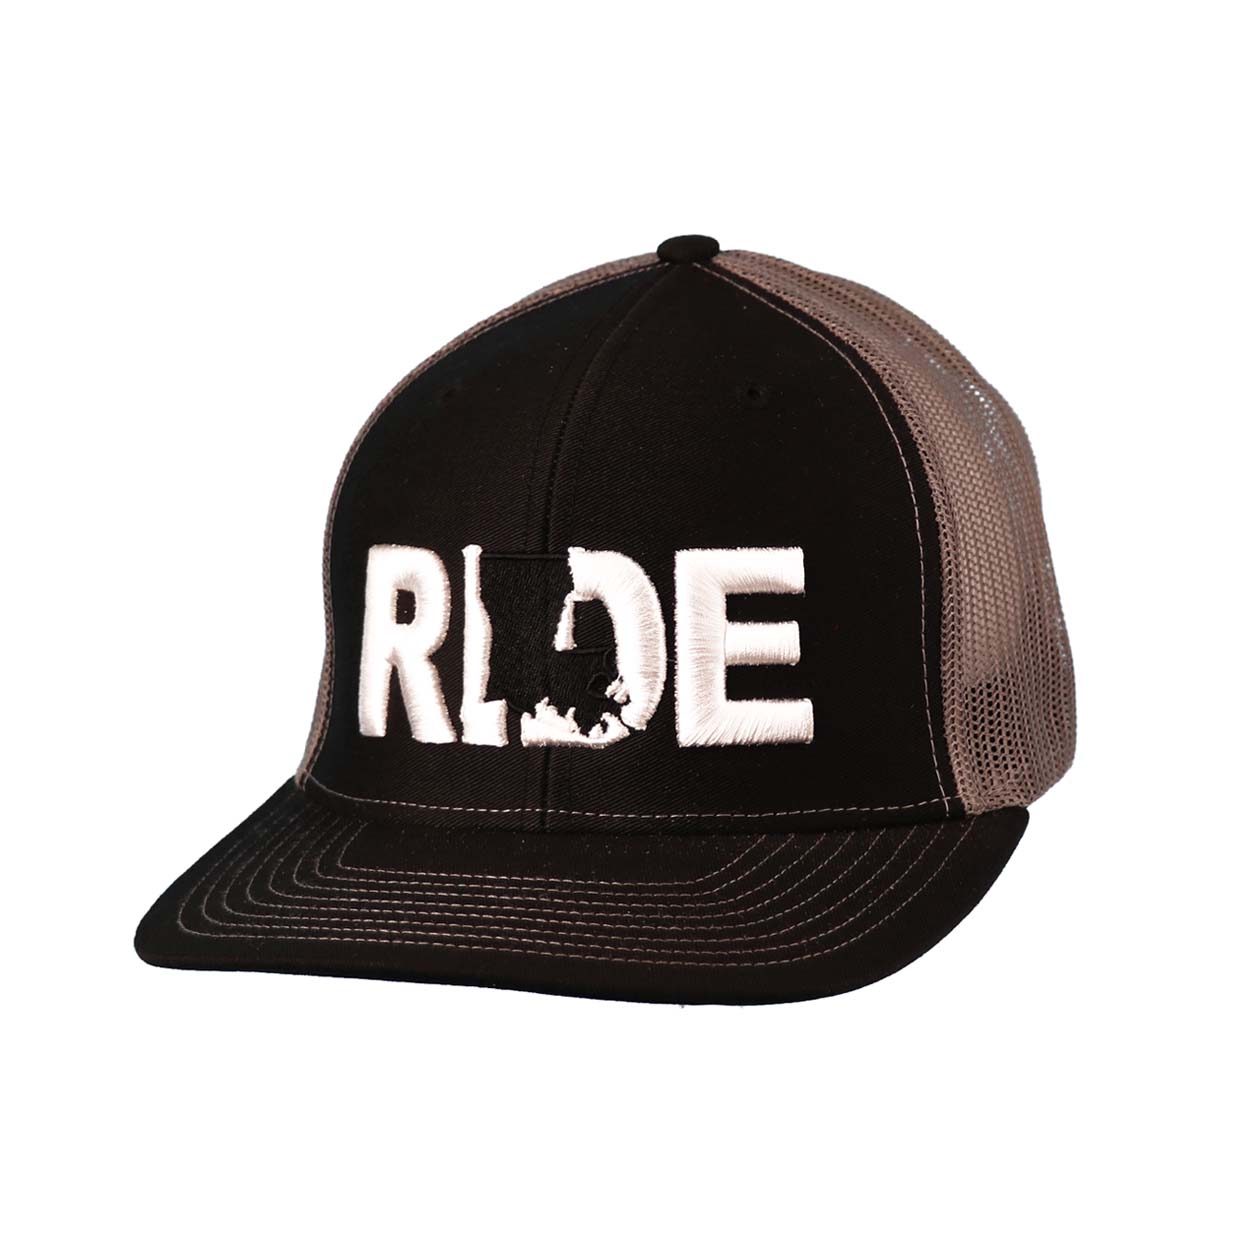 Ride Louisiana Classic Embroidered Snapback Trucker Hat Black/Gray